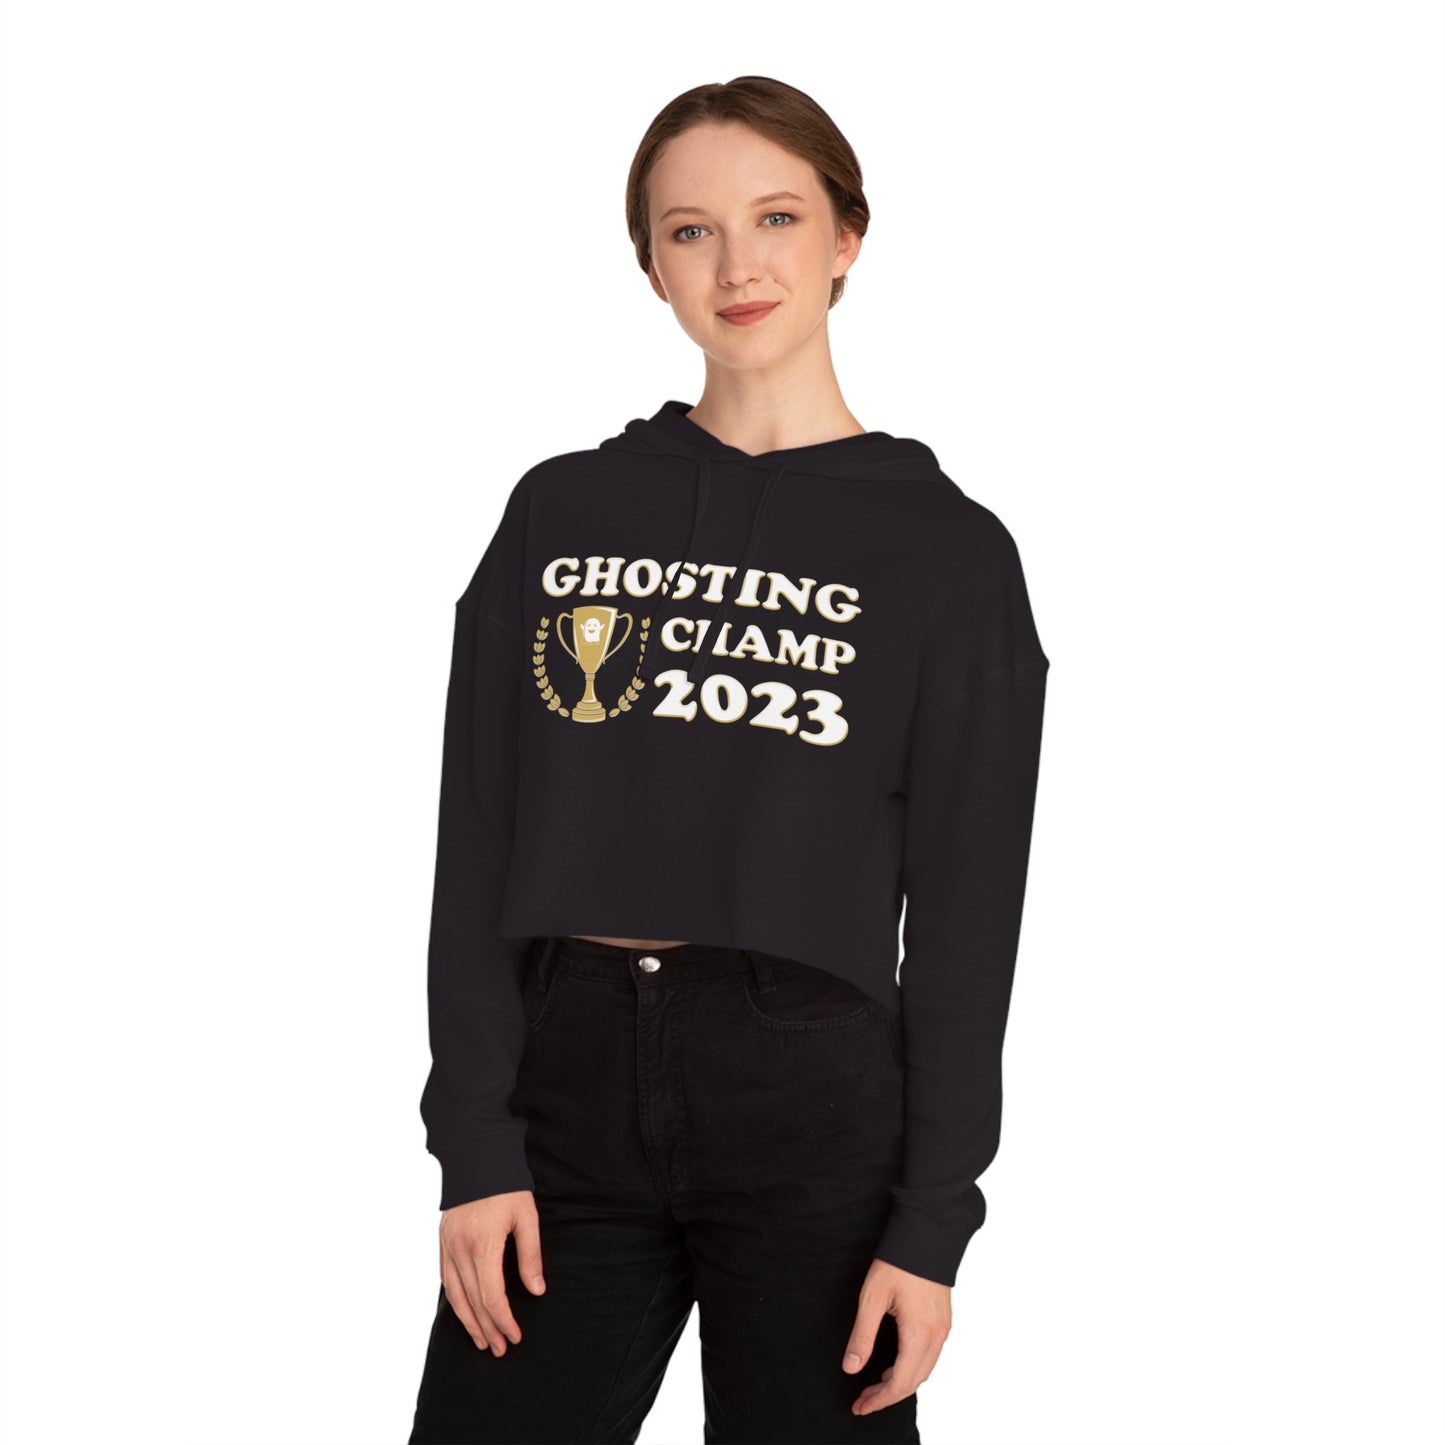 Ghosting Champ 2023 - Women’s Cropped Hooded Sweatshirt